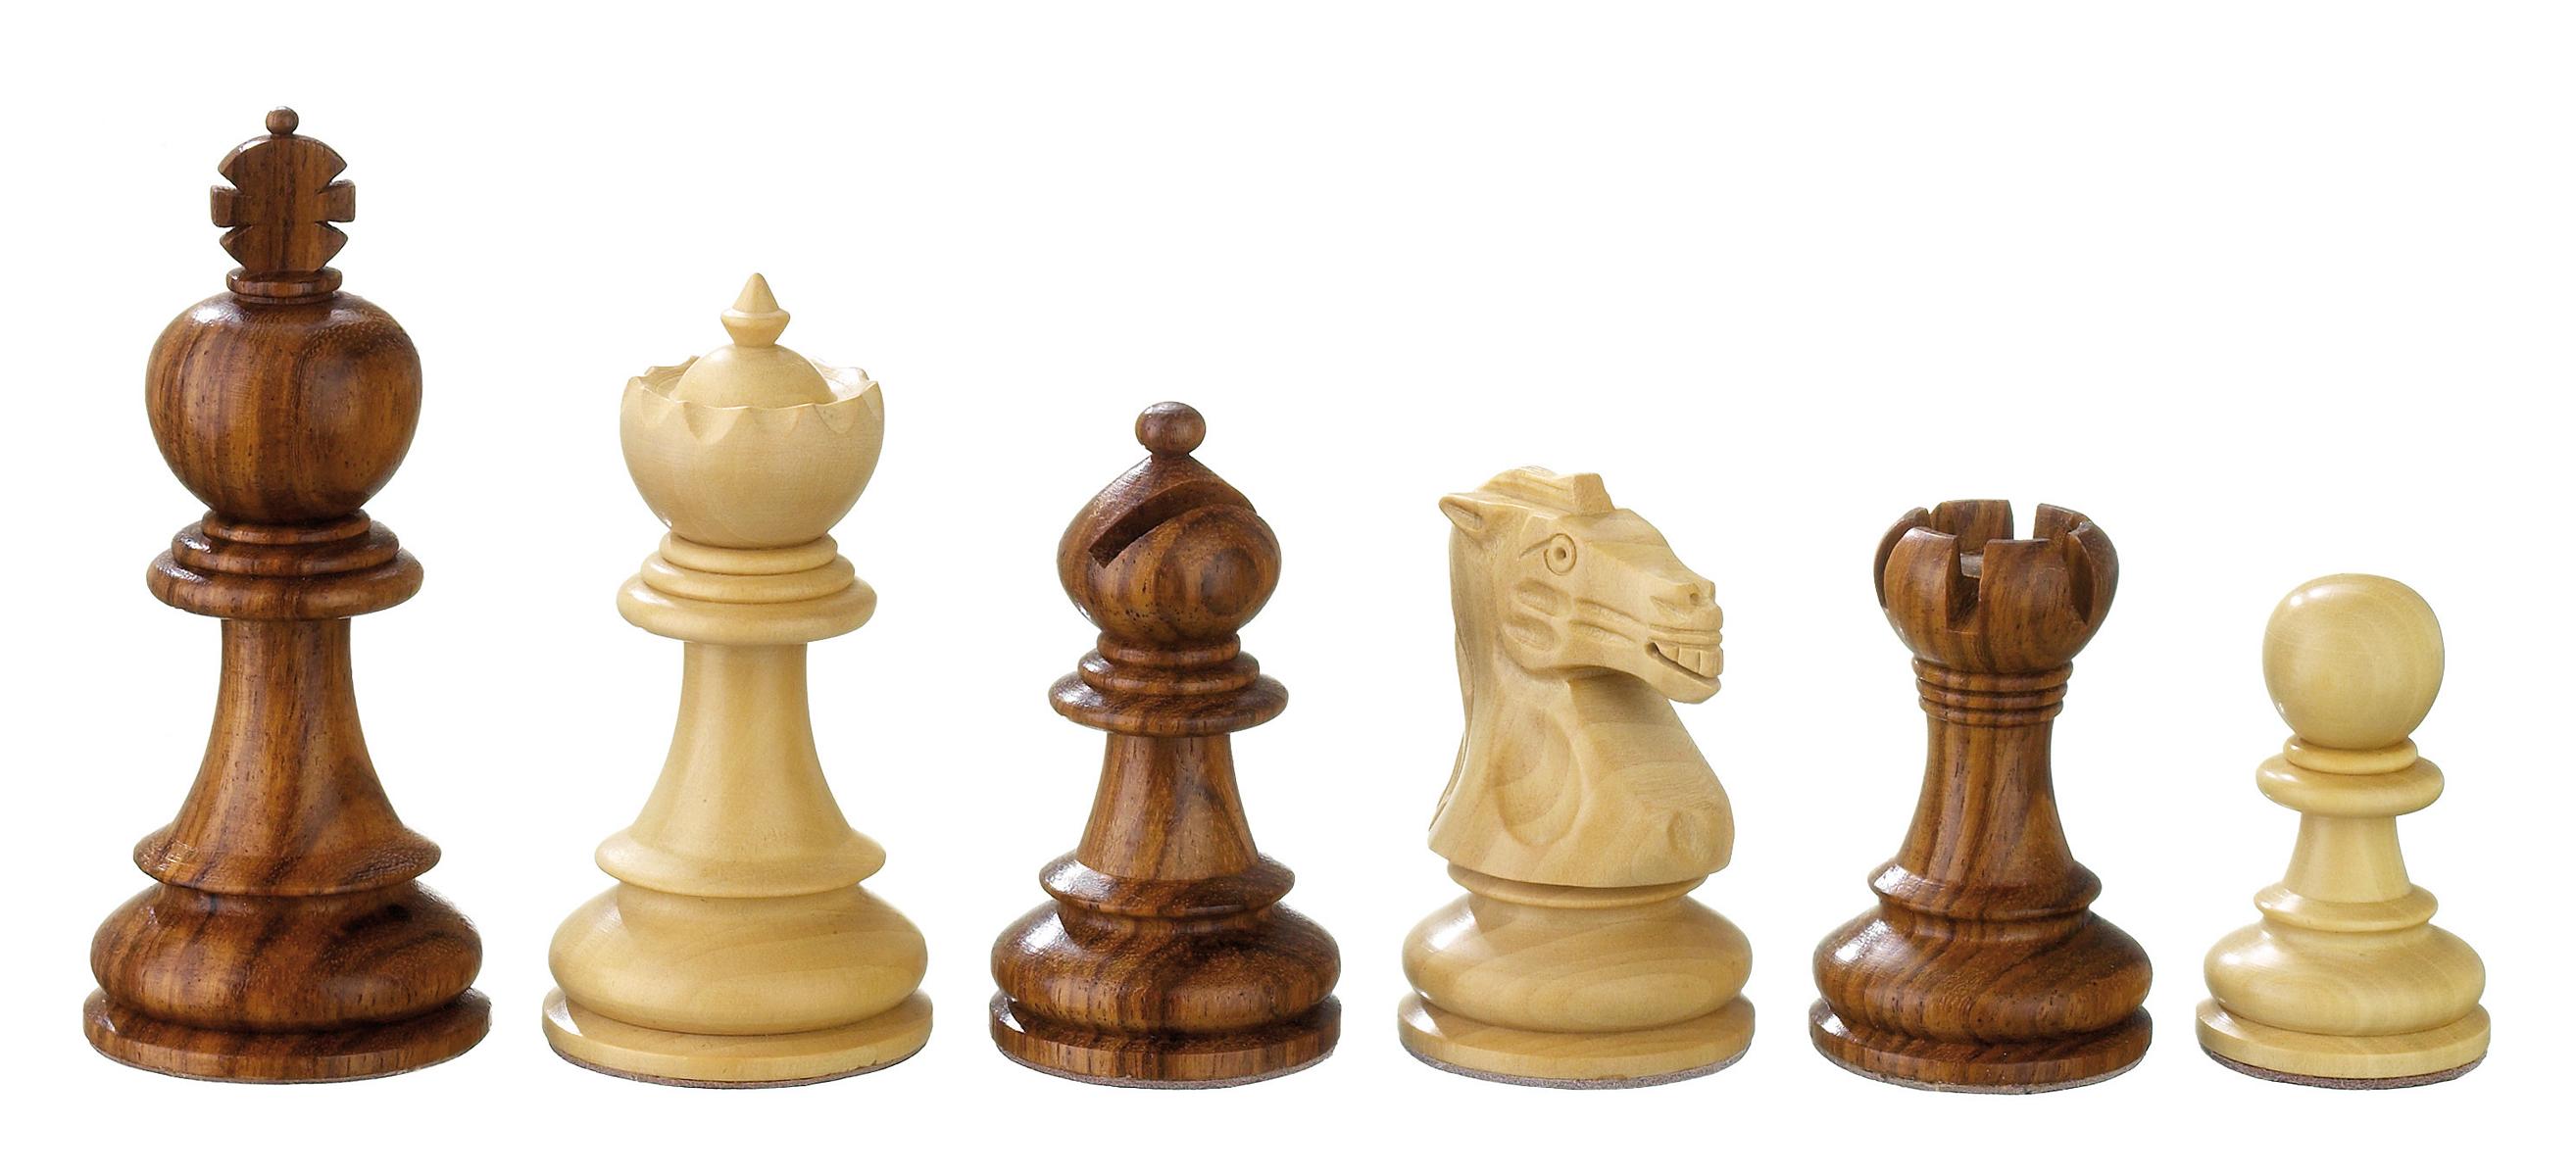 Schachfiguren Valerian, Königshöhe 90 mm, in Set-Up Box